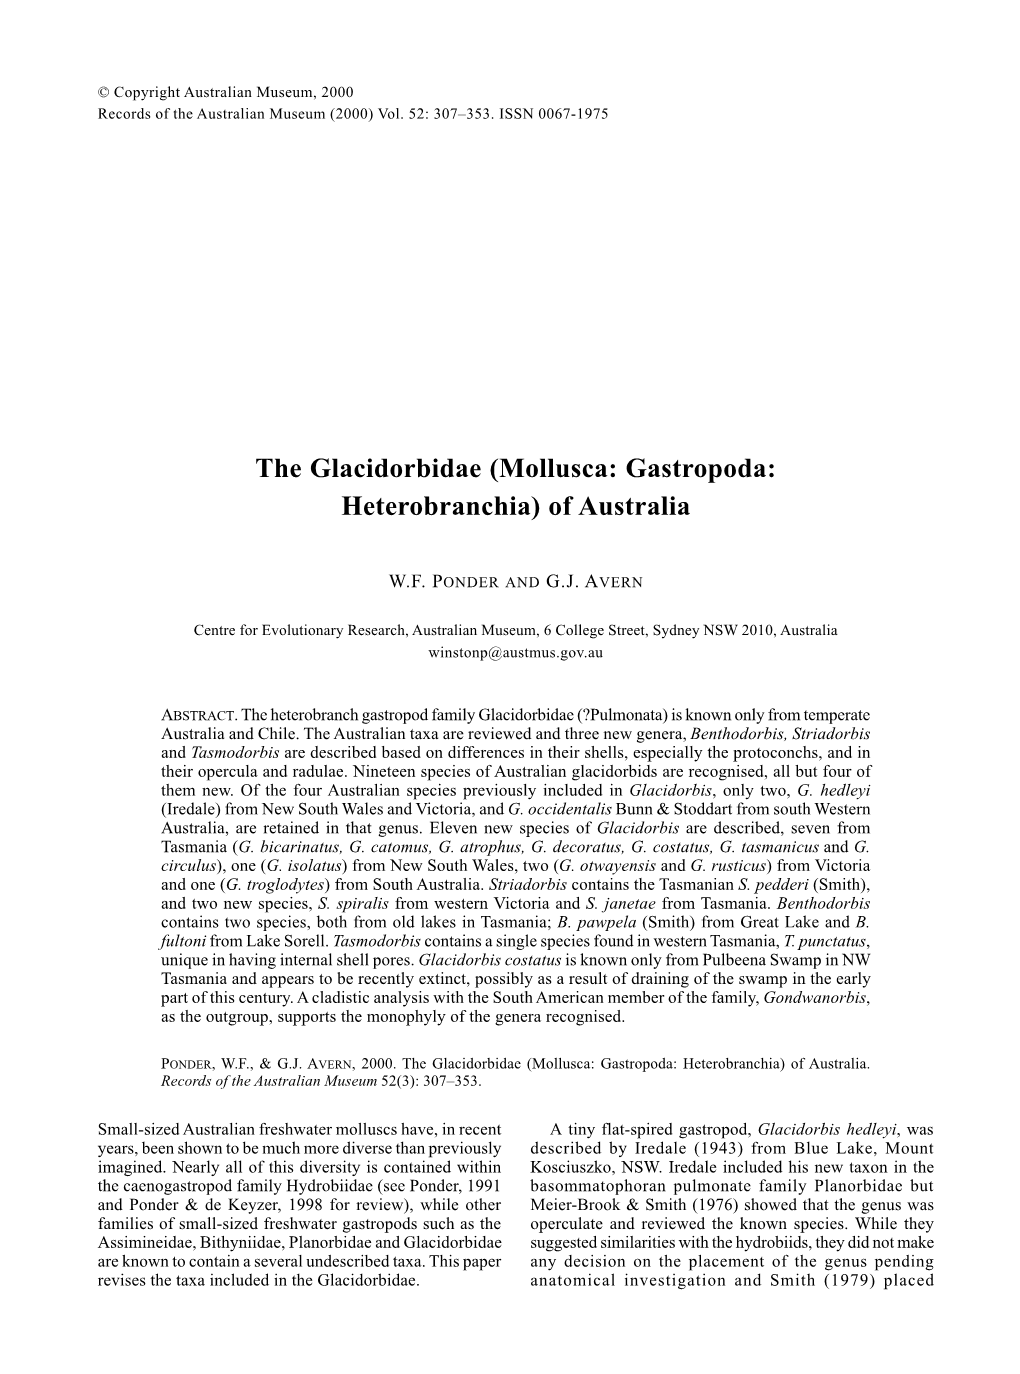 The Glacidorbidae (Mollusca: Gastropoda: Heterobranchia) of Australia